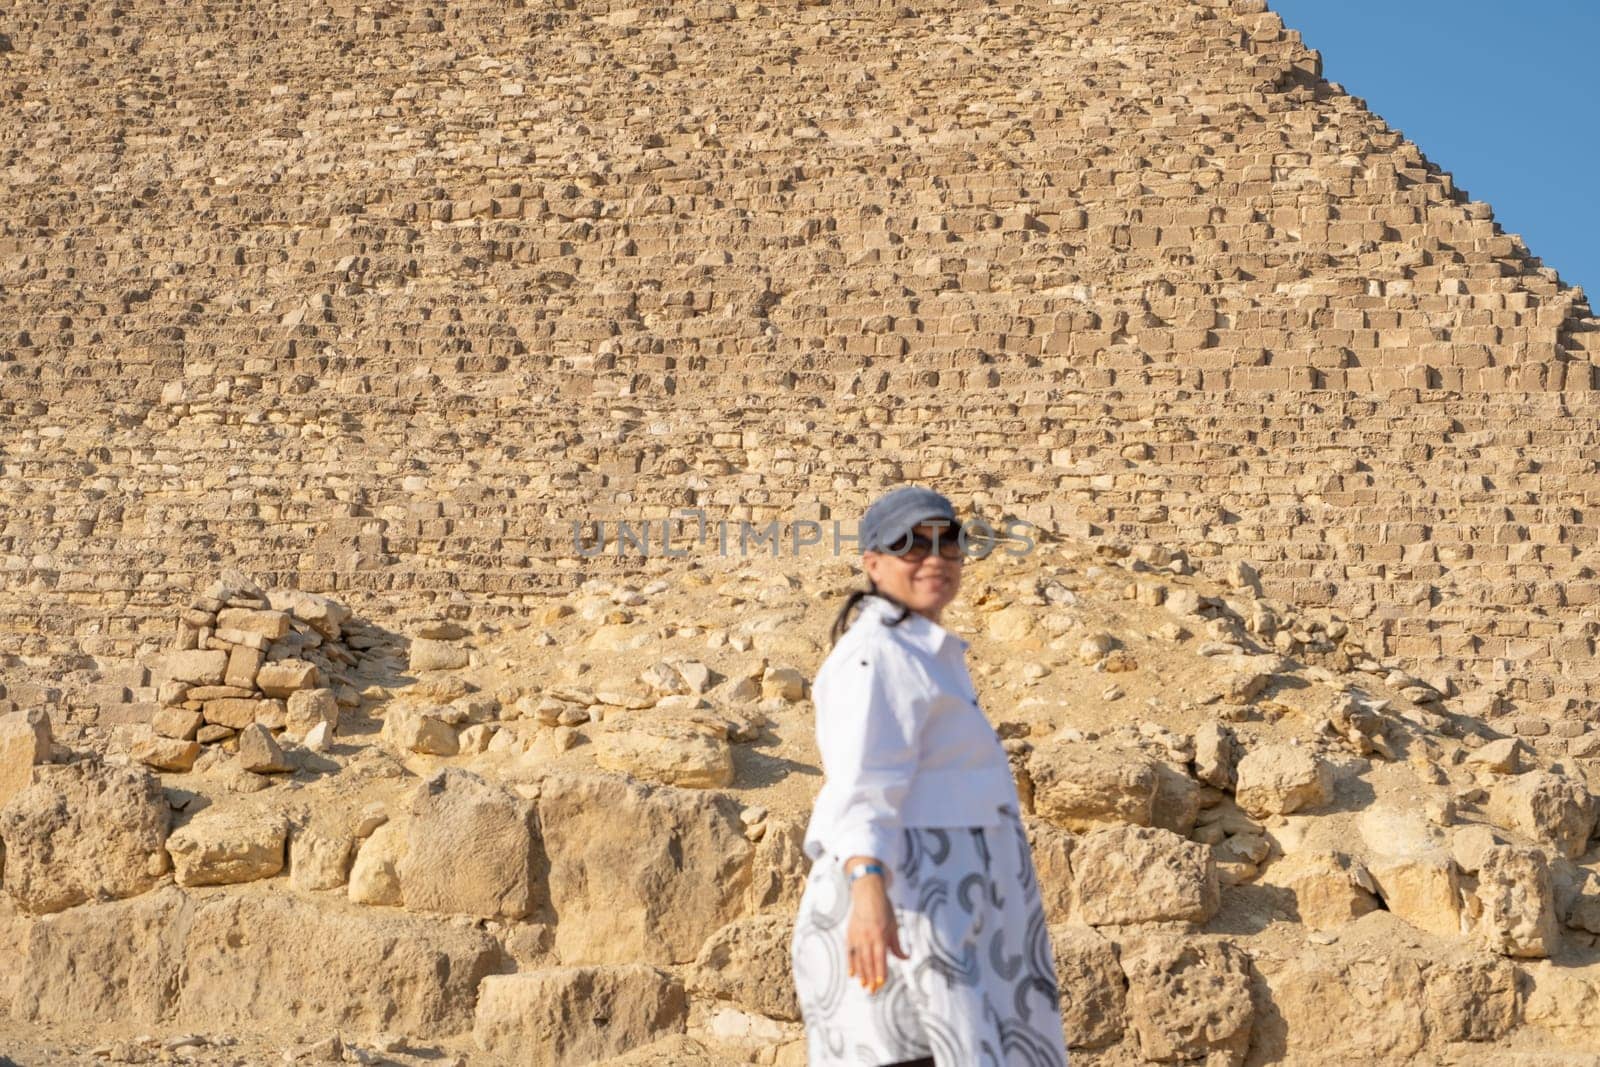 Woman wearing light clothing, facing the Pyramids of Gyza by Desperada